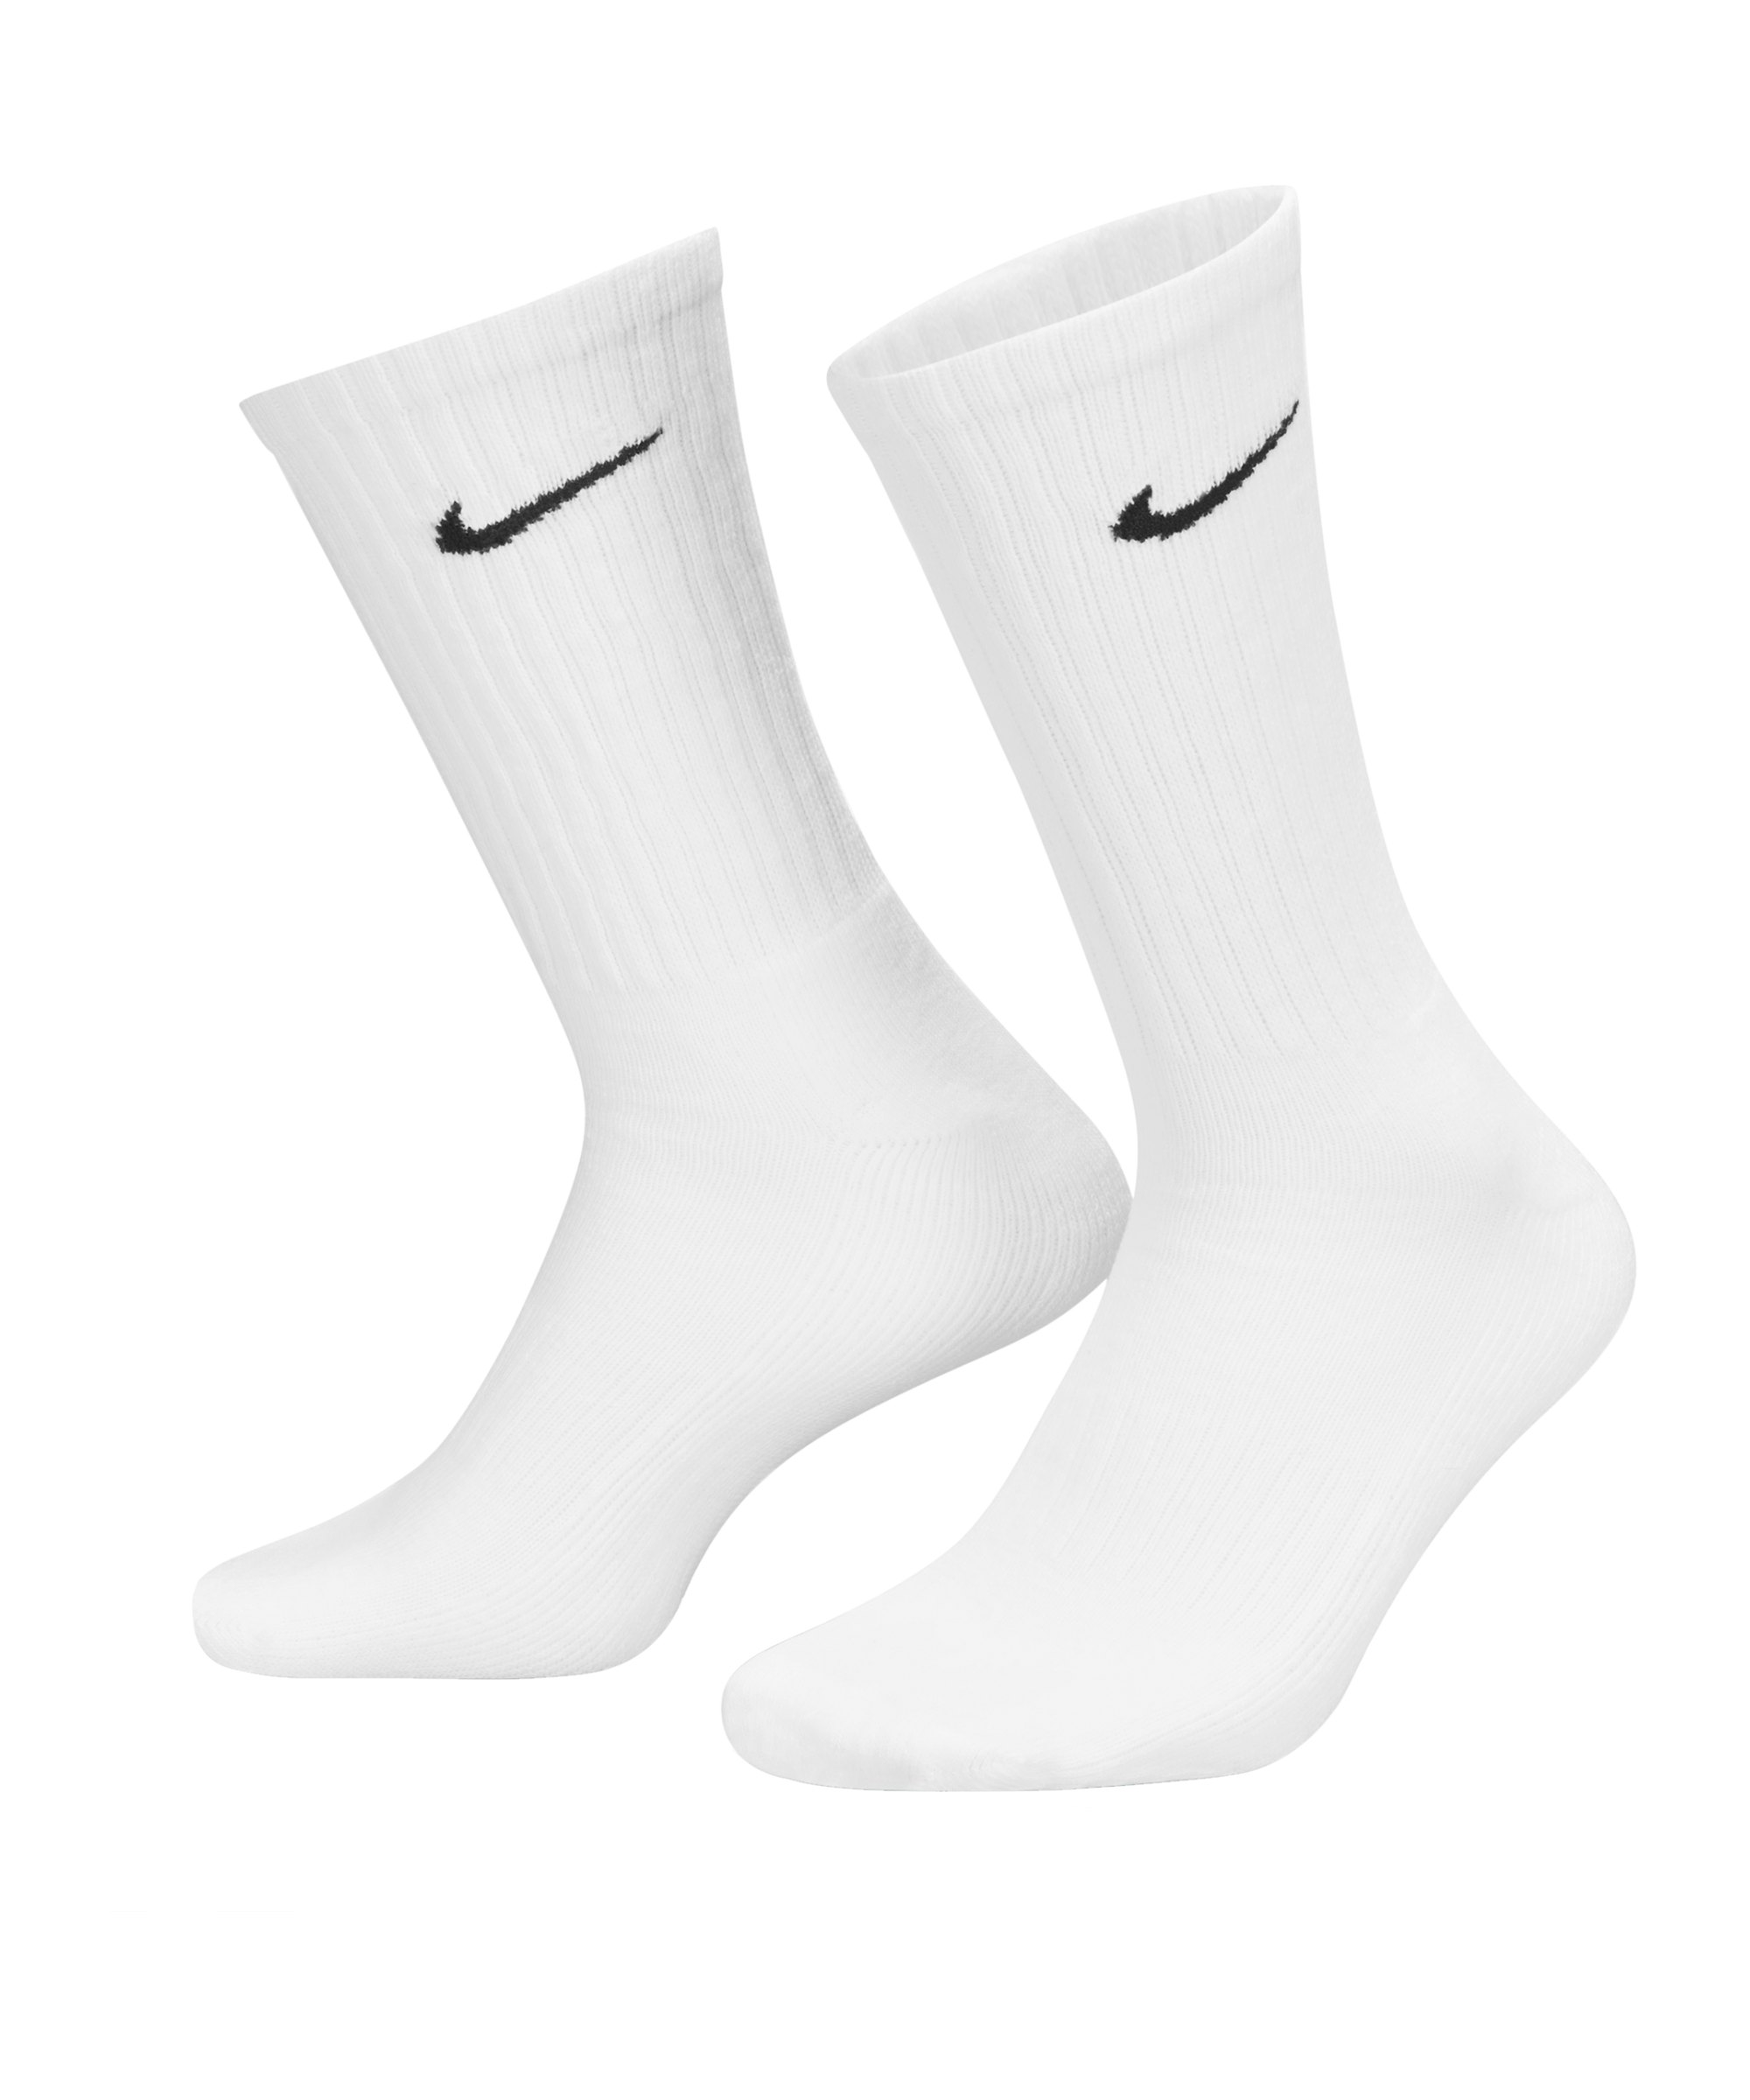 Nike Socken Value Baumwolle Crew 3er Pack F101 - weiss